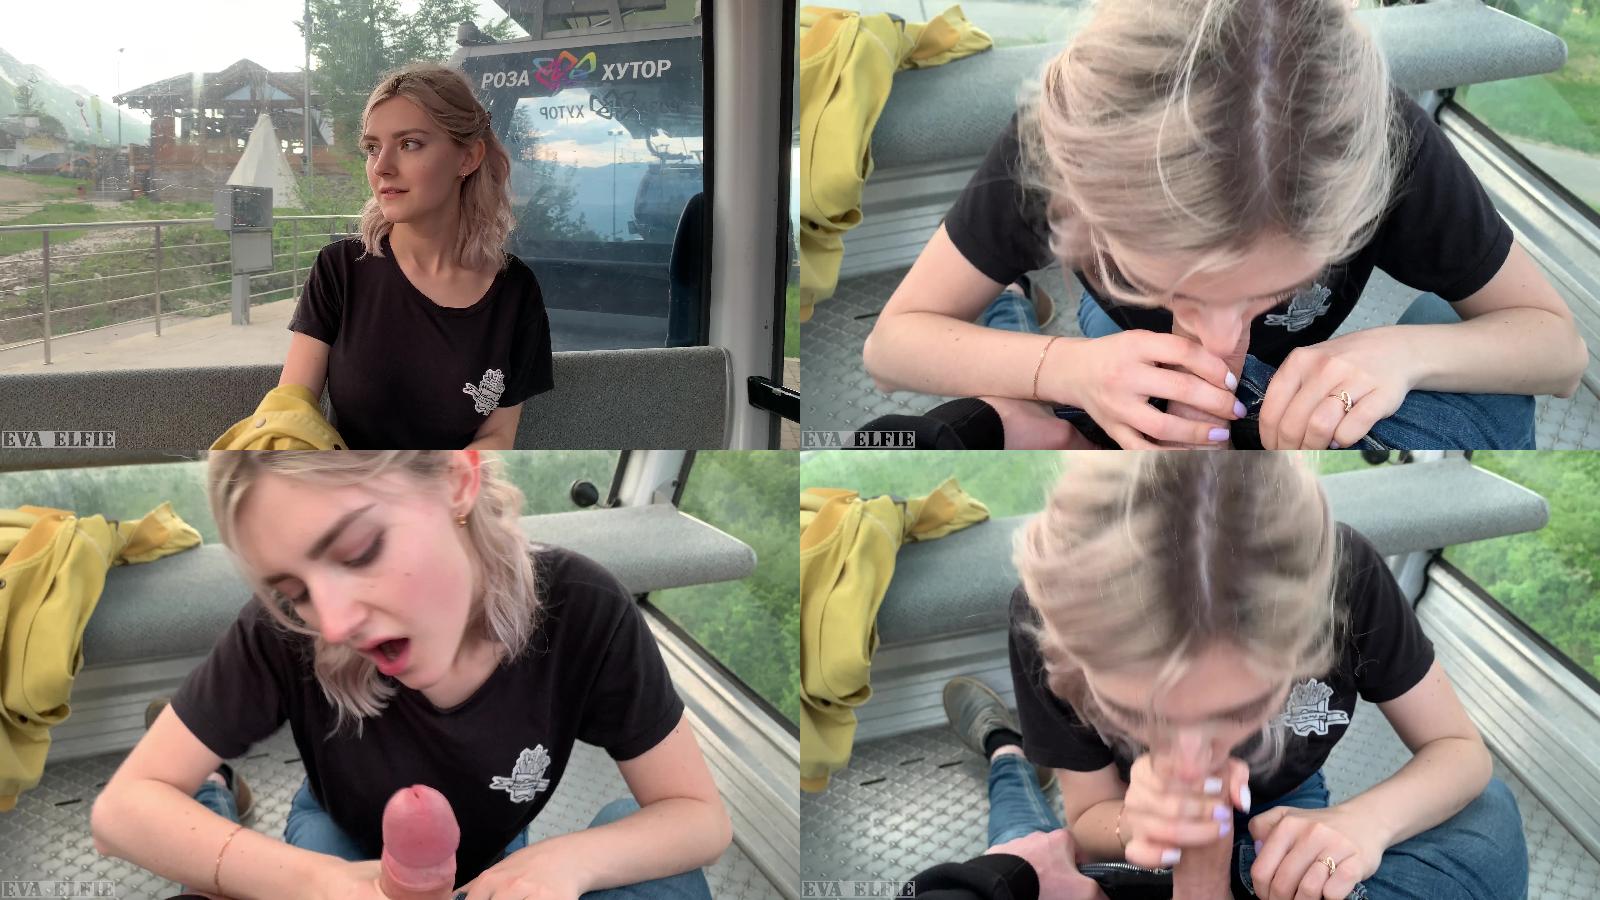 [ModelHub] Teen swallows loads of cum on a cable car – public blowjob by Eva Elfie